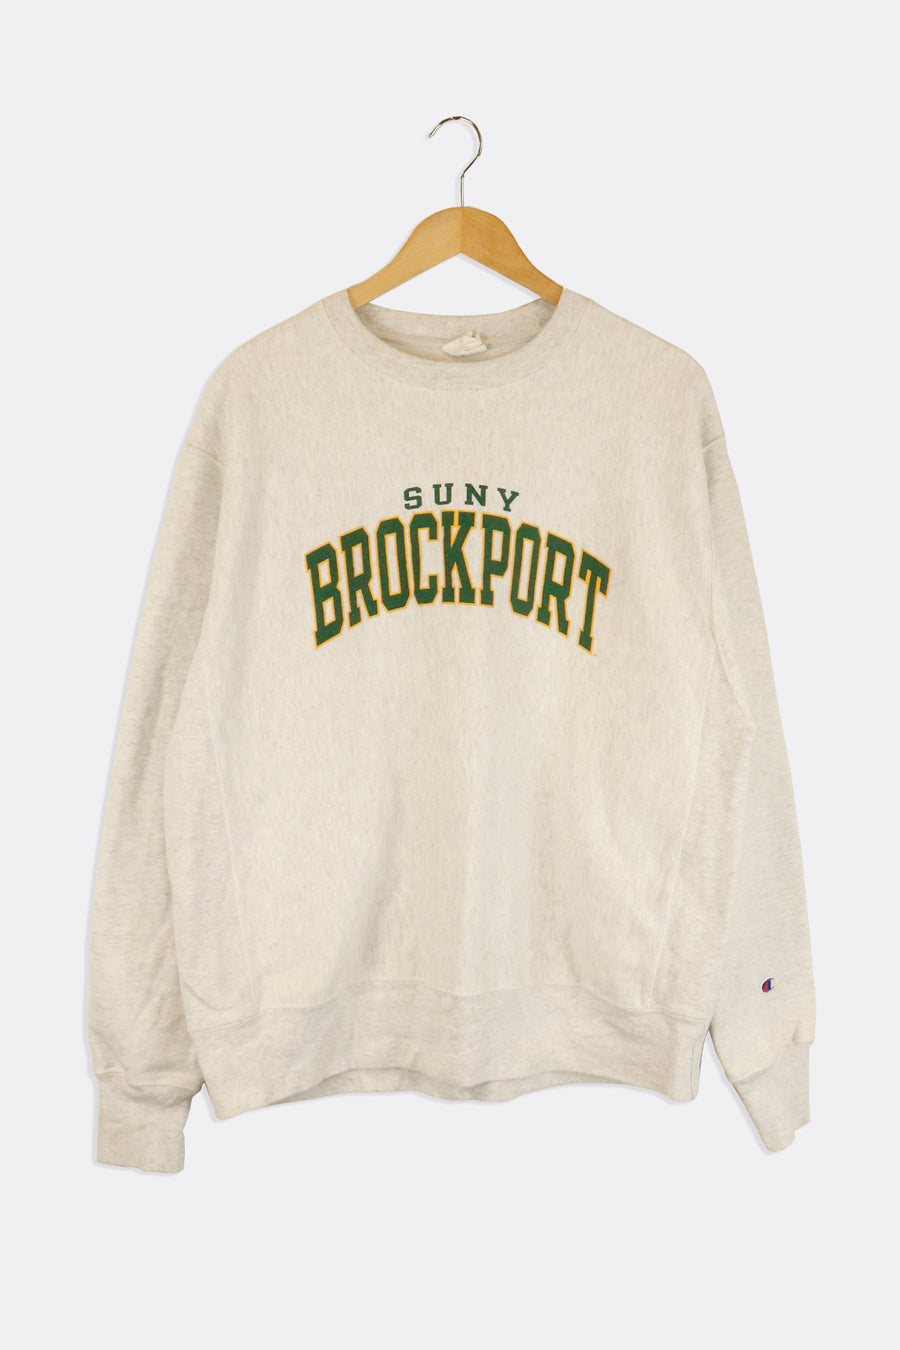 Vintage Varsity Suny Brockport Large Font Outlined In Yellow Vinyl Sweatshirt Sz L